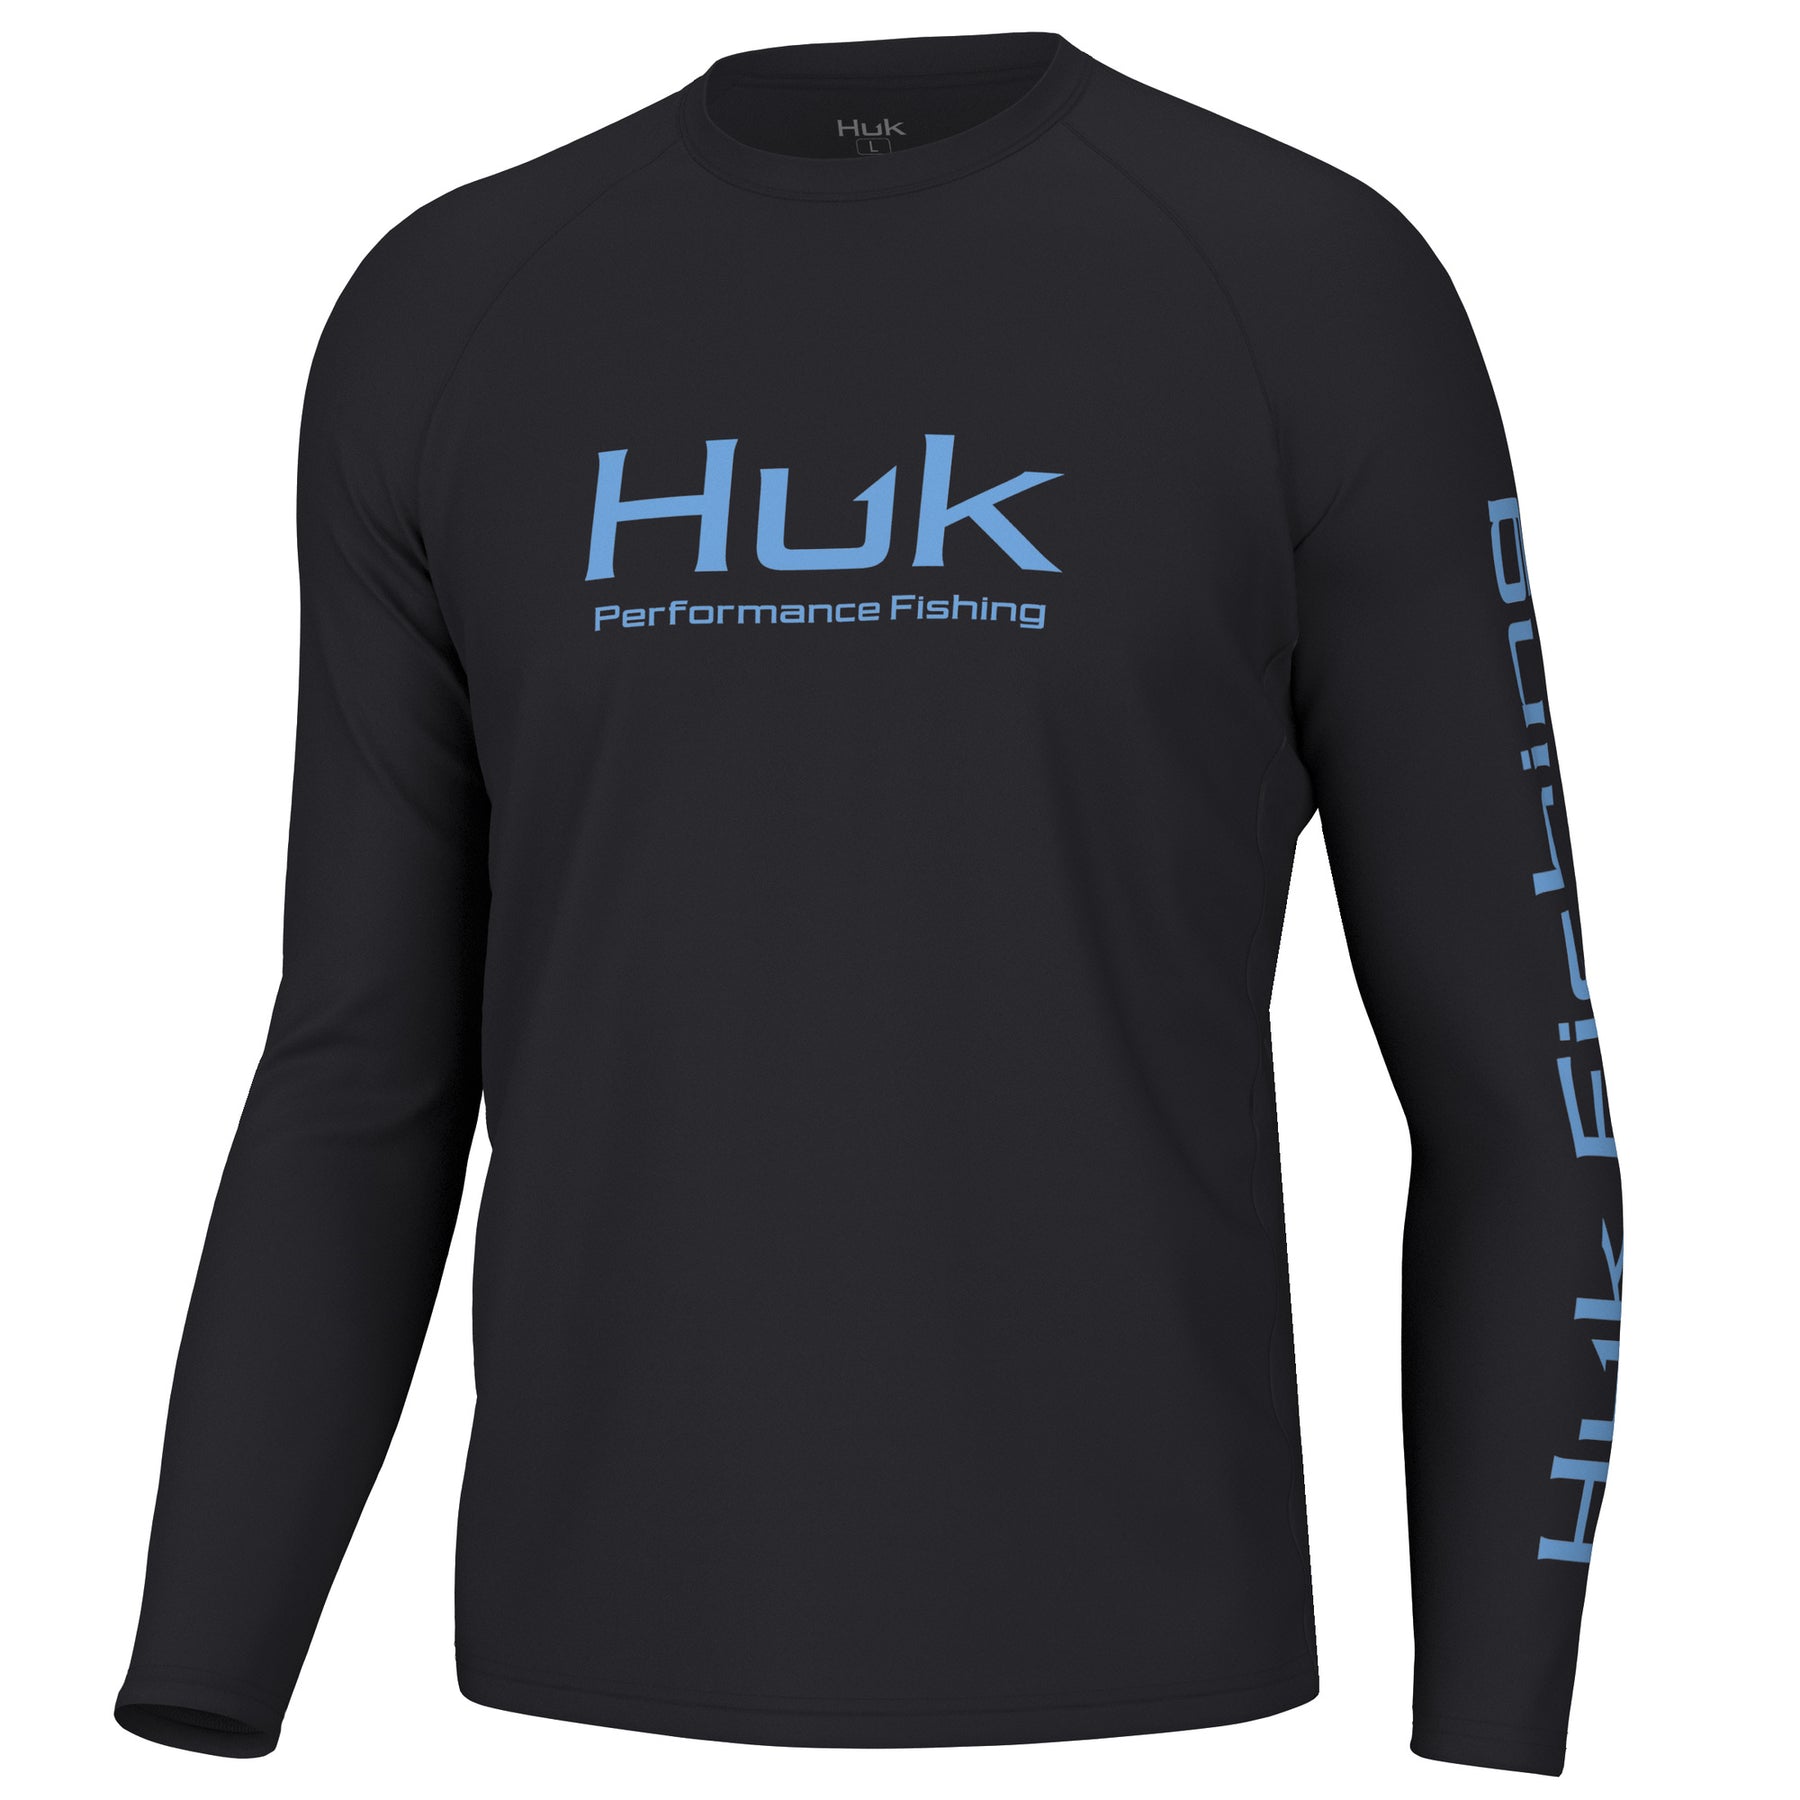 Performance Fishing Shirts from Huk – Huk Gear